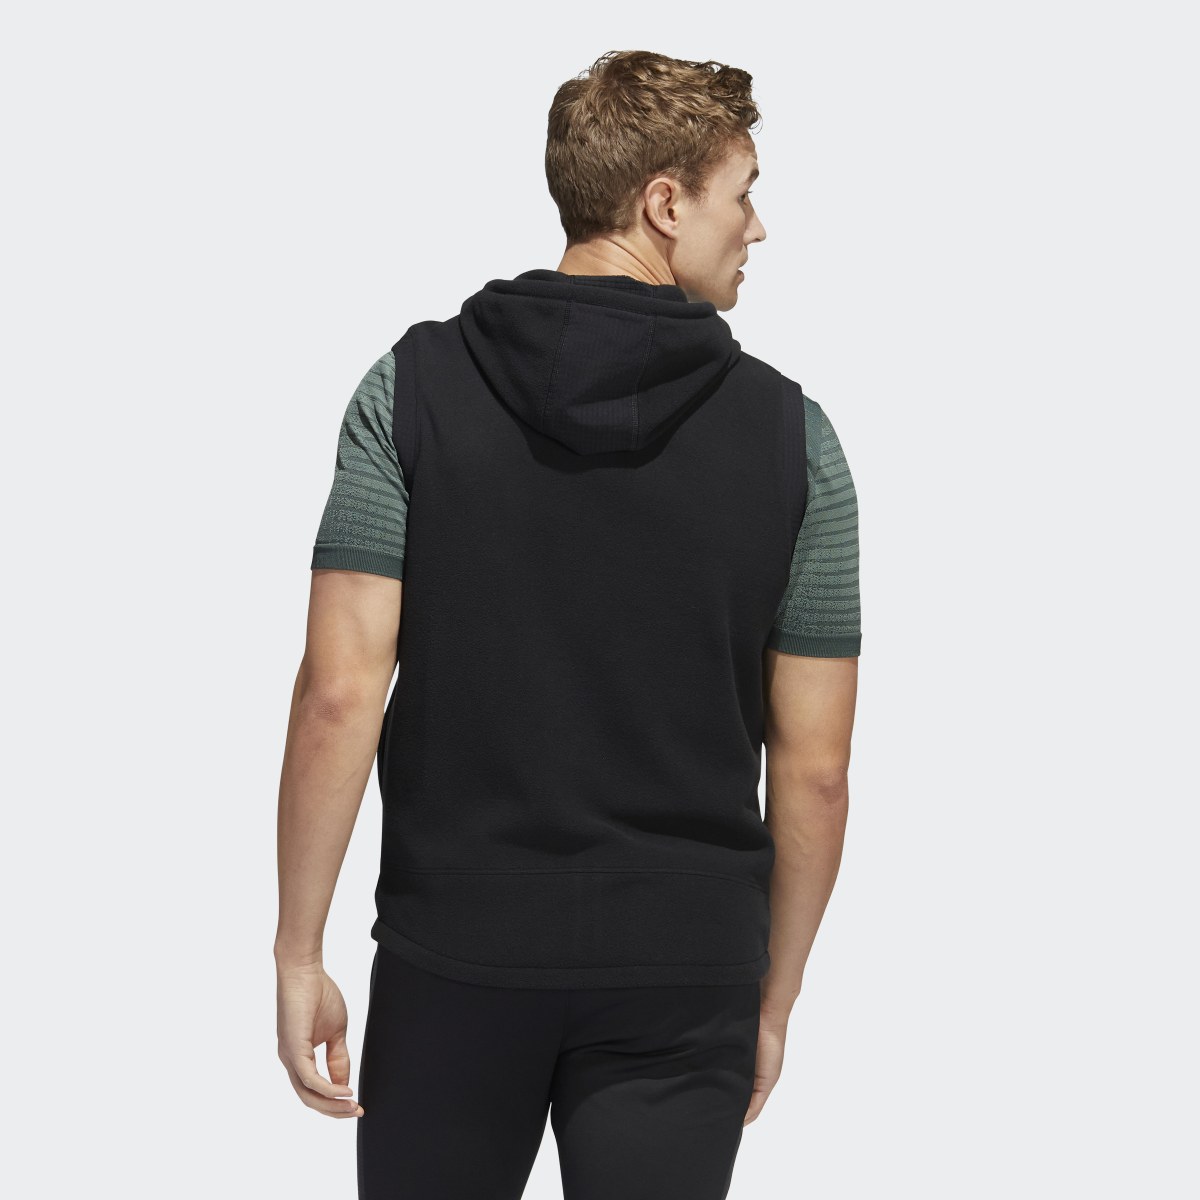 Adidas Statement Full-Zip Hooded Vest. 4